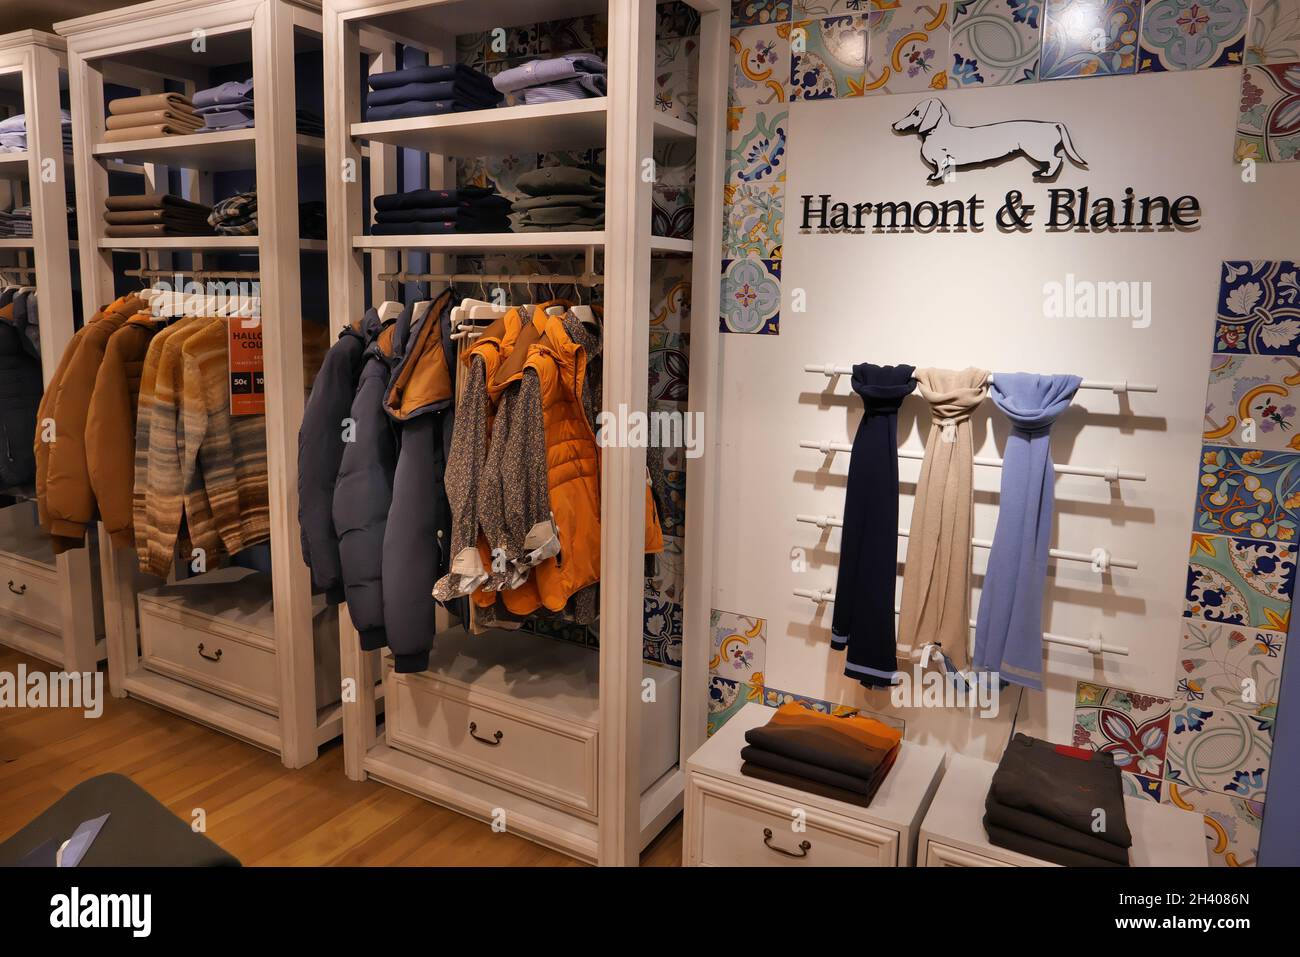 HARMONT & BLAINE CLOTHING ON DISPLAY INSIDE THE FASHION STORE Stock Photo -  Alamy